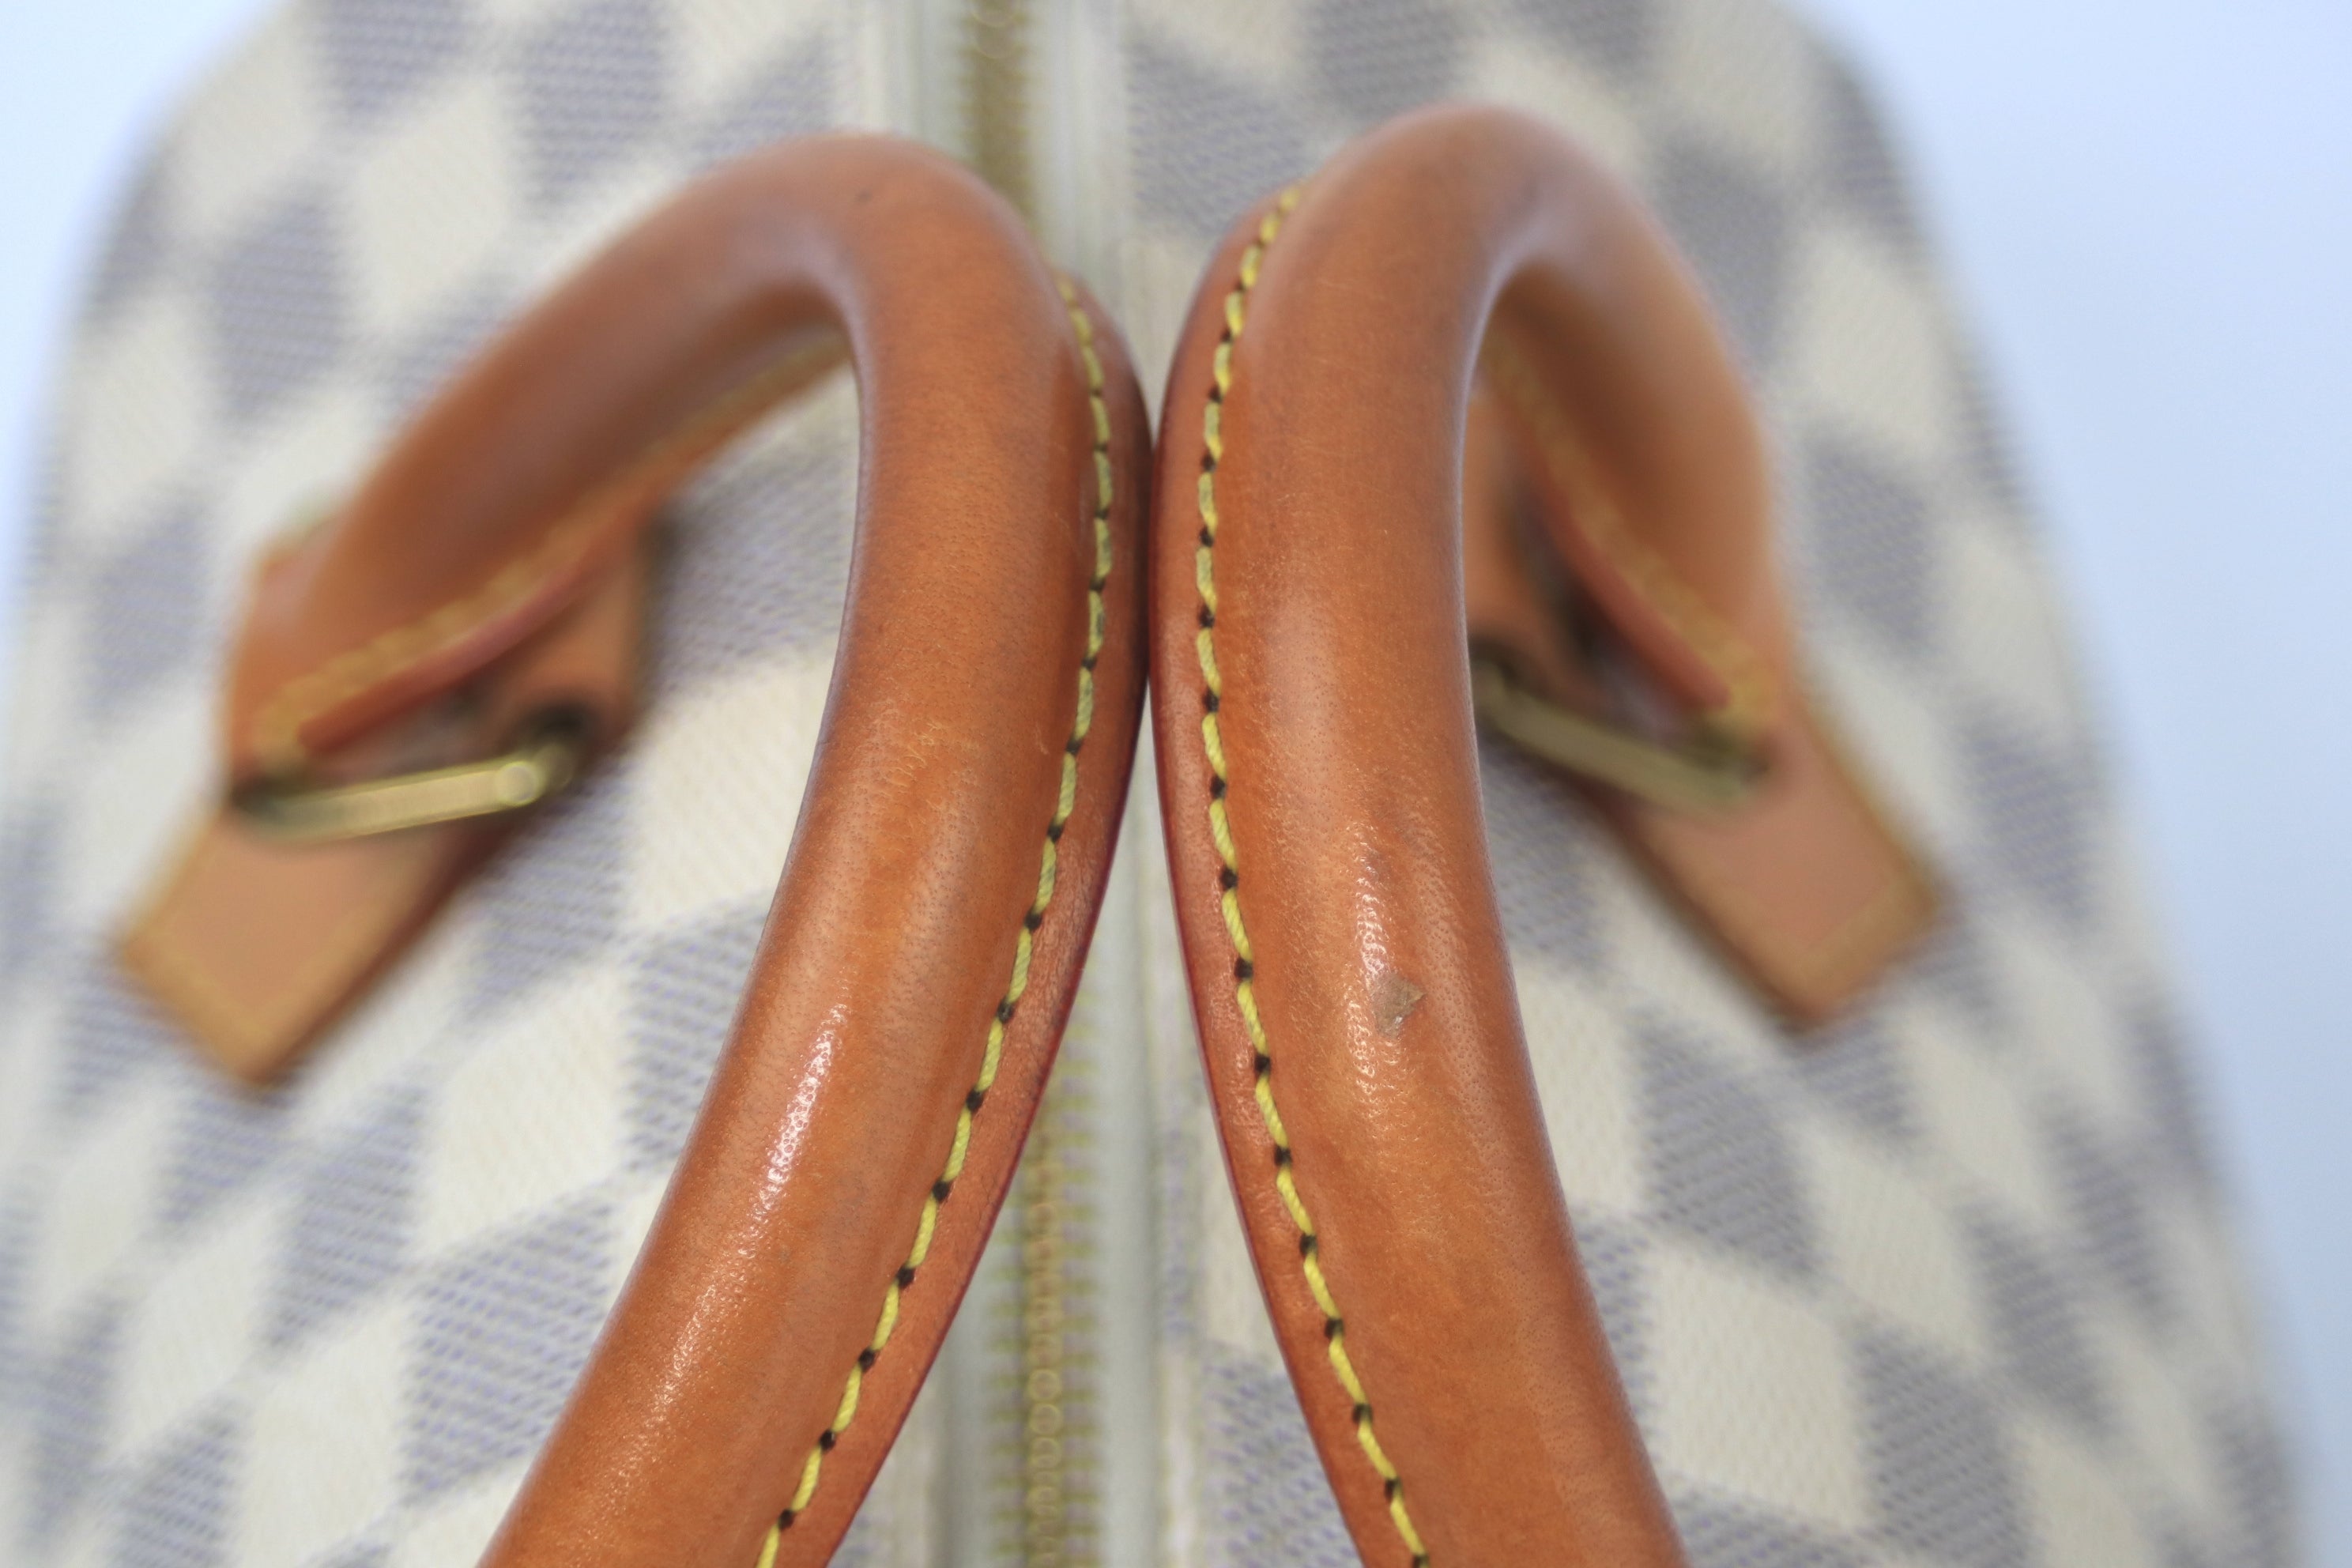 Louis Vuitton Speedy 25 Damier Azur Handbag Used (6010)